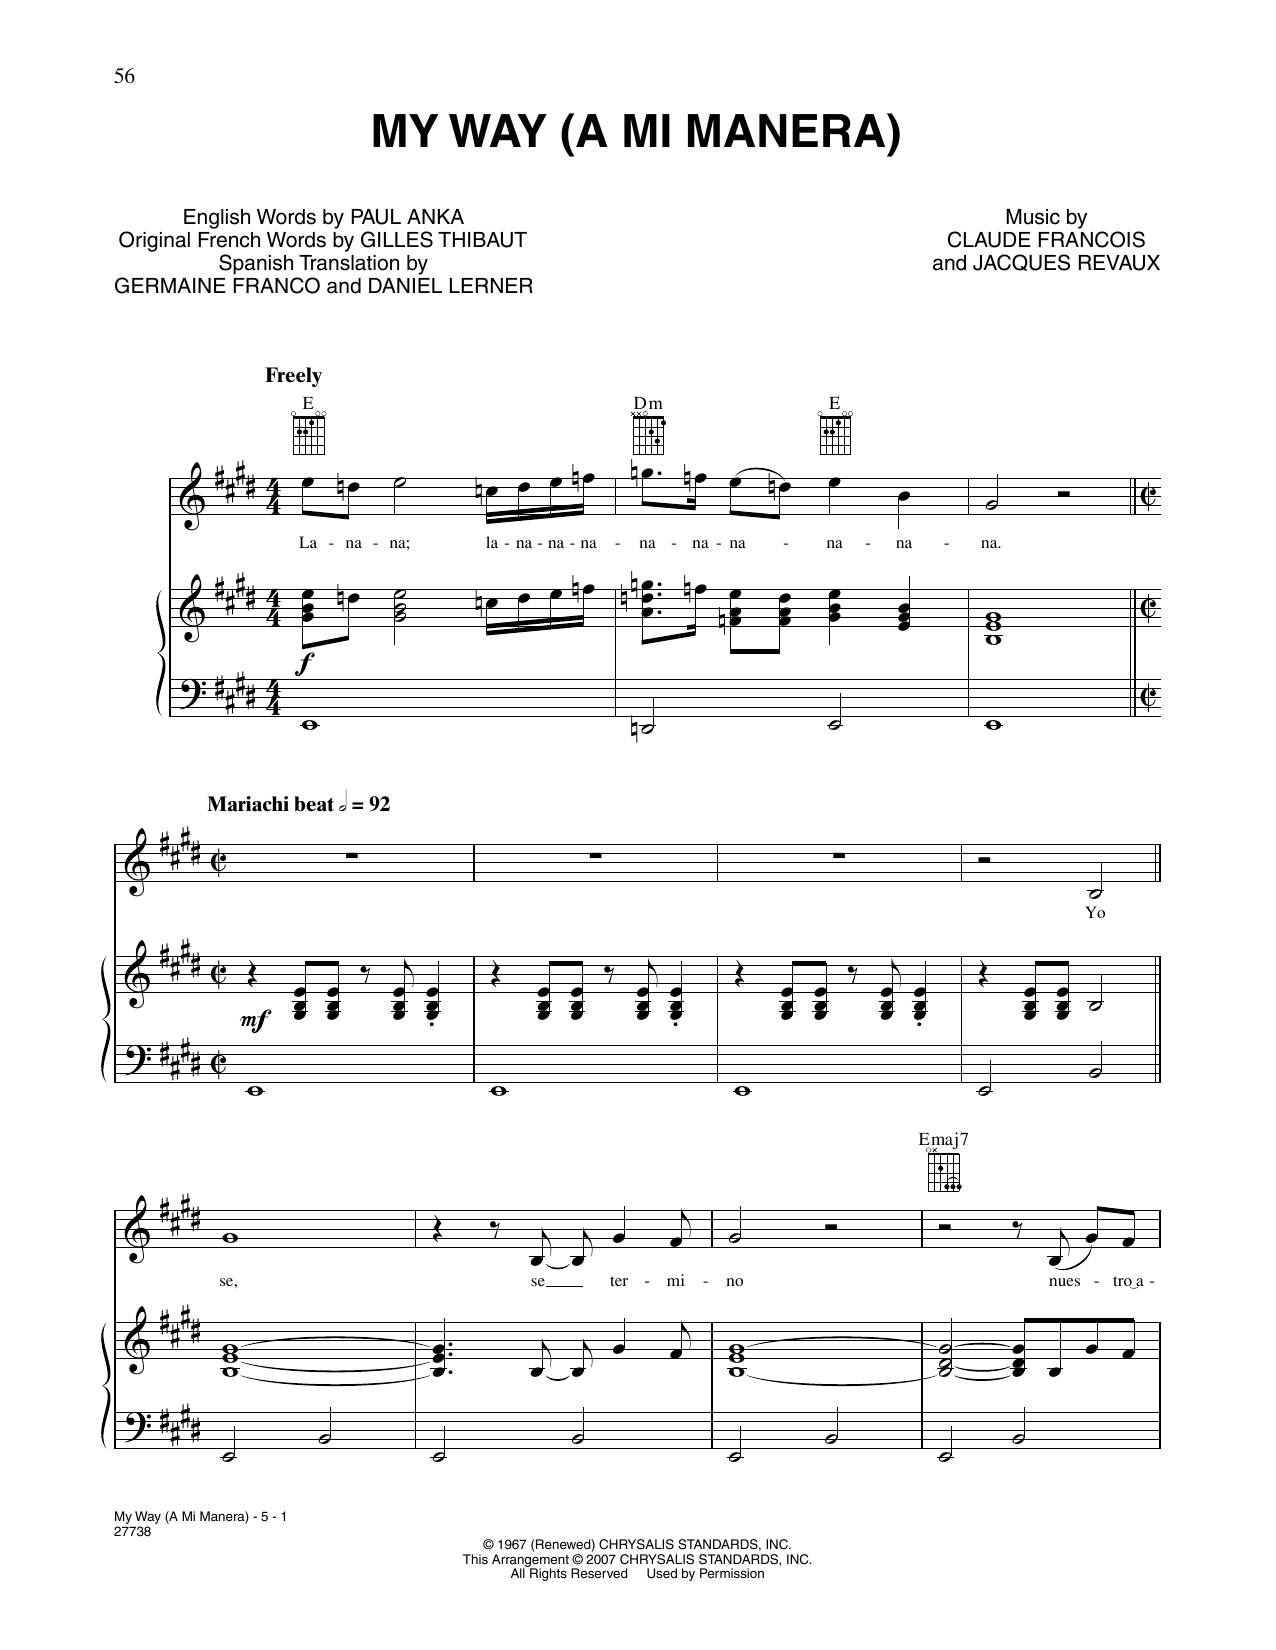 Frank Sinatra - My Way (Guitar Chord& TAB) Sheets by Learning Guitar